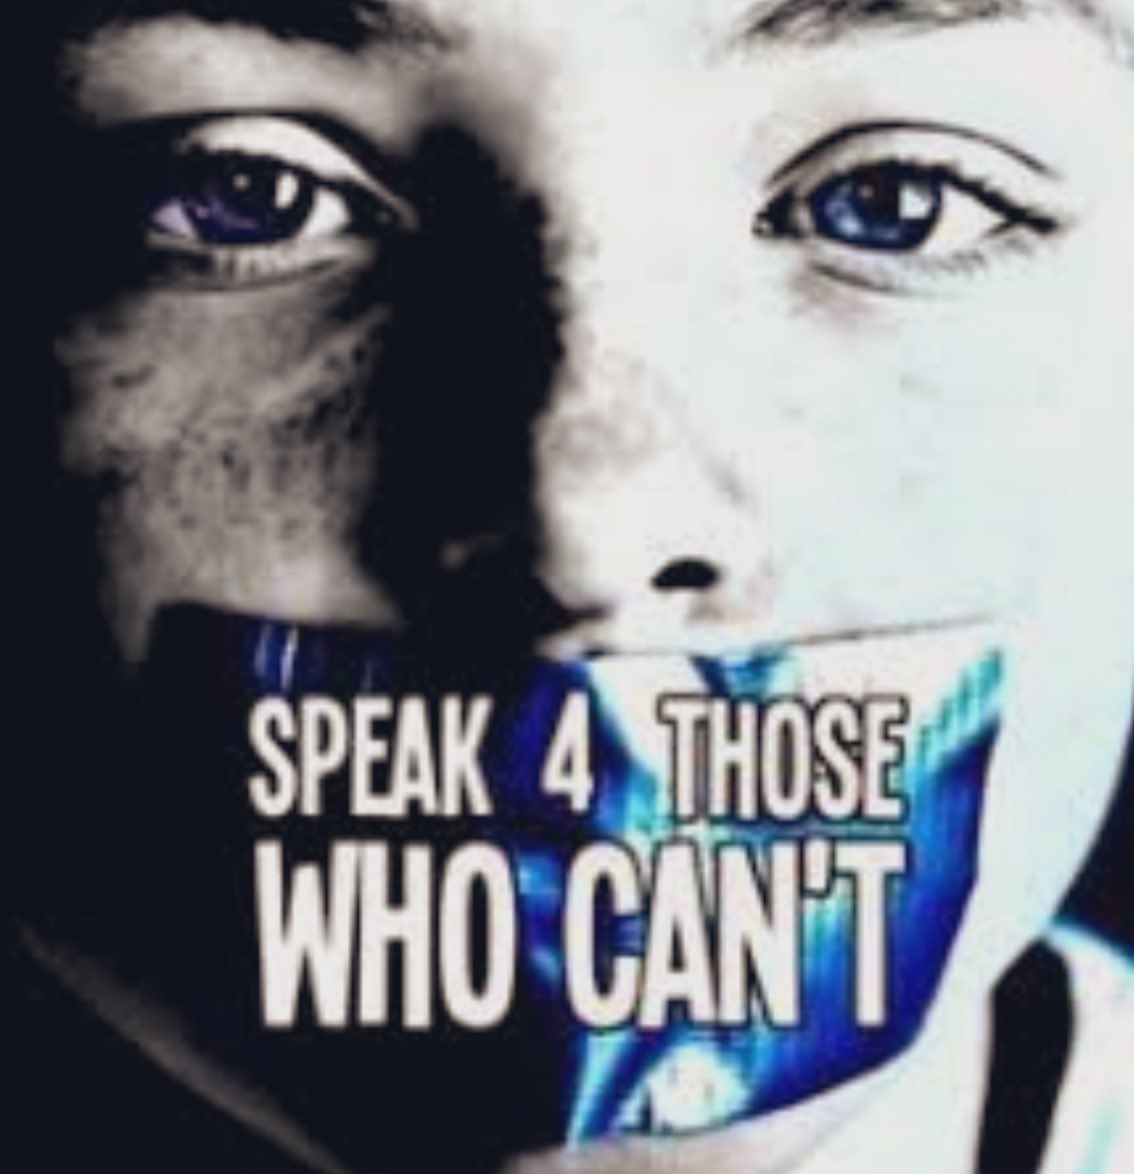 Speak for those who can’t 
#The_Great_Awakening_ 
#SaveTheChildrenWorldWide